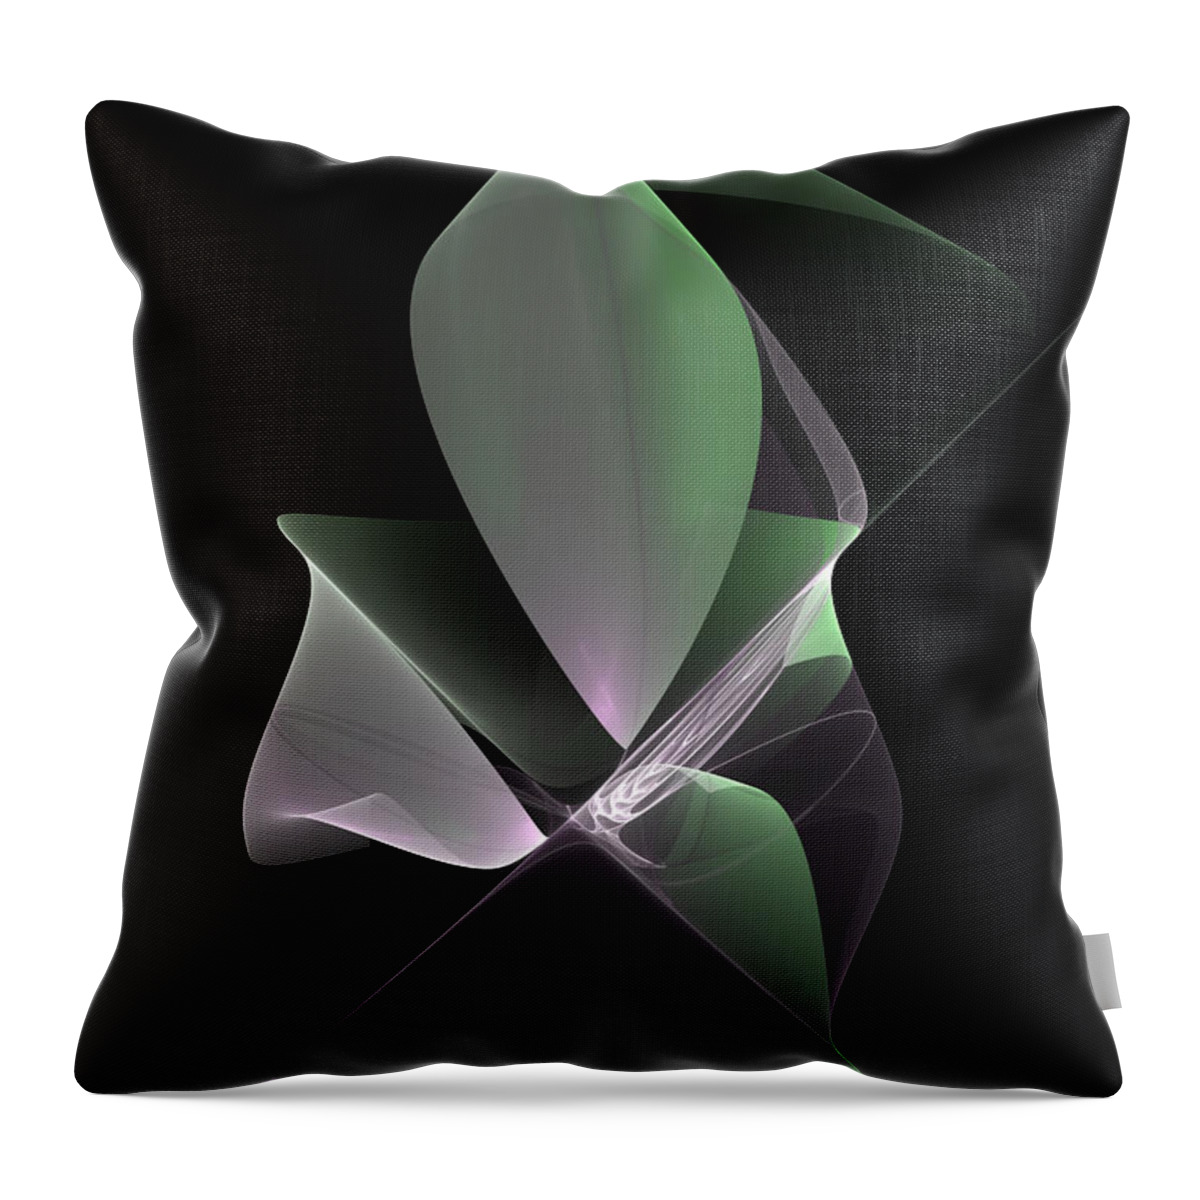 Abstract Throw Pillow featuring the digital art The Light Inside by Gabiw Art